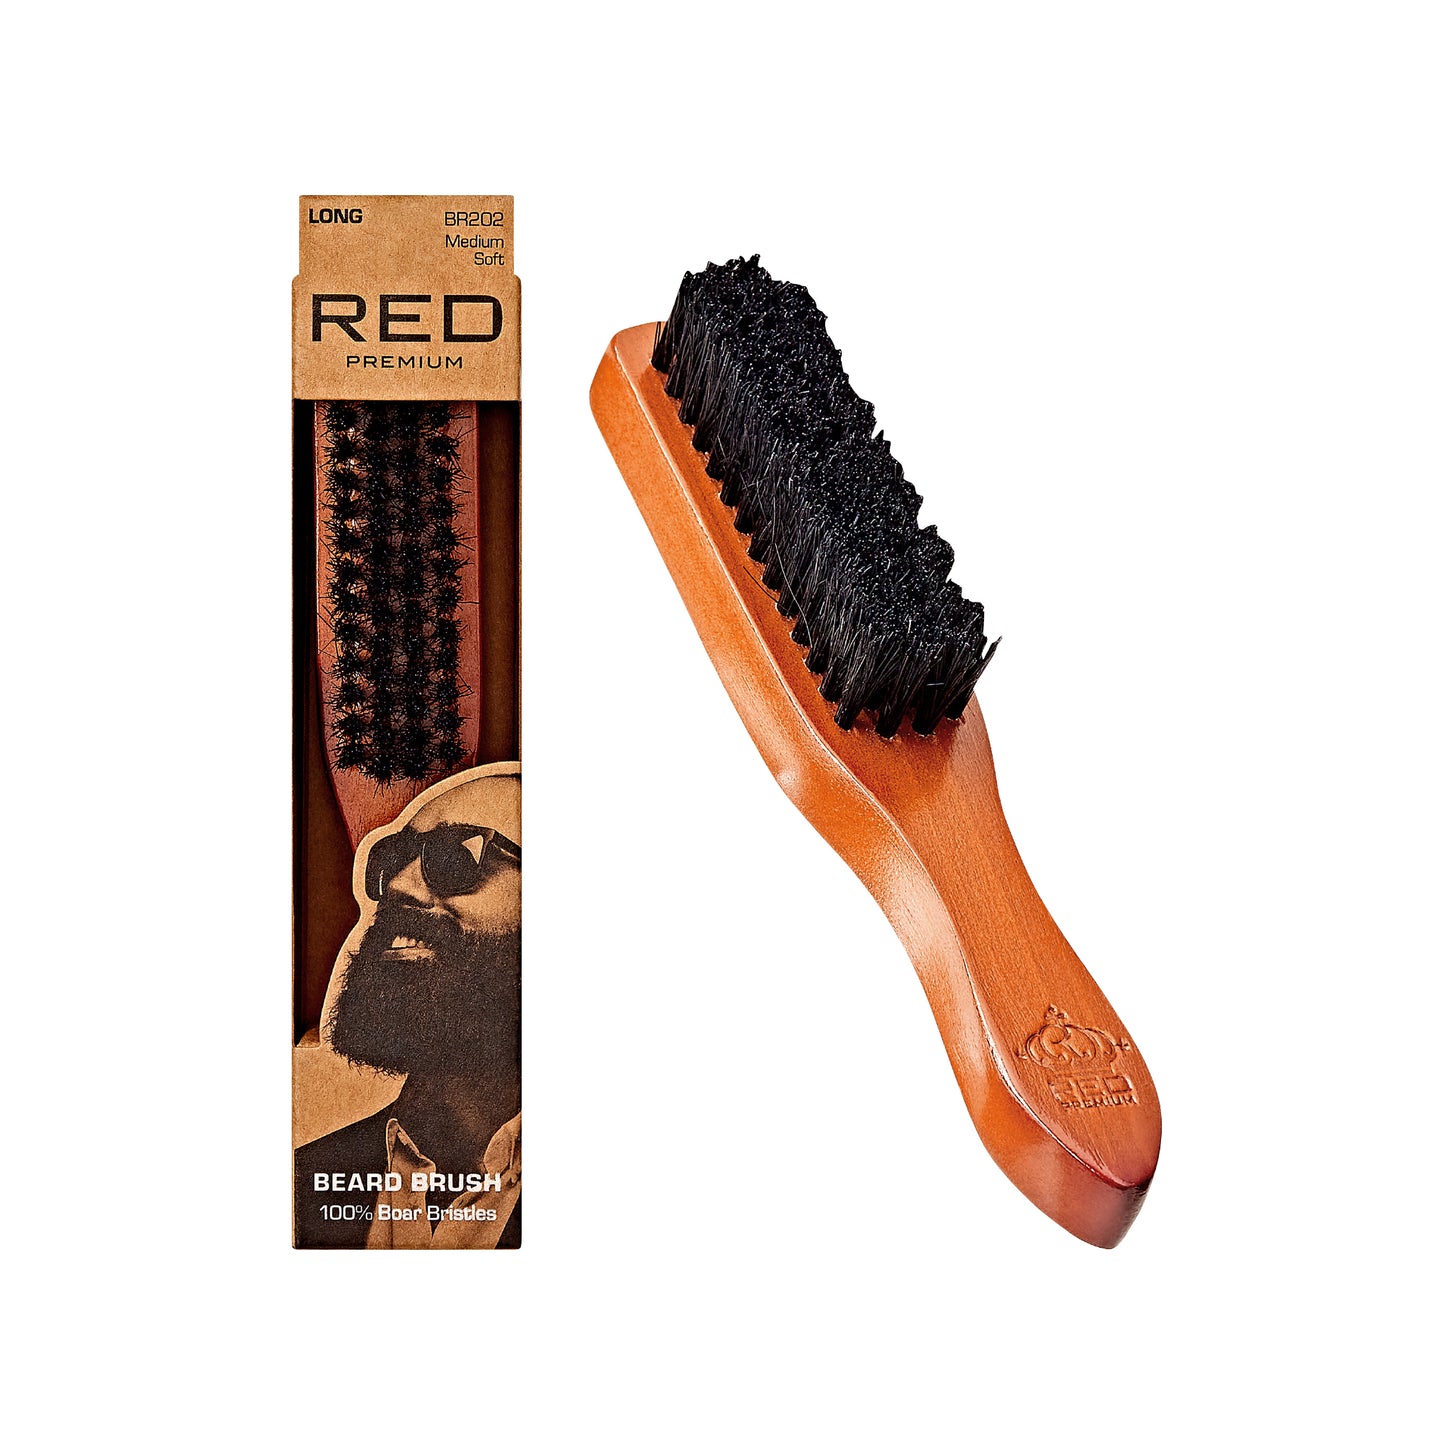 RED BY KISS Premium Beard Medium Soft Long Handle Brush